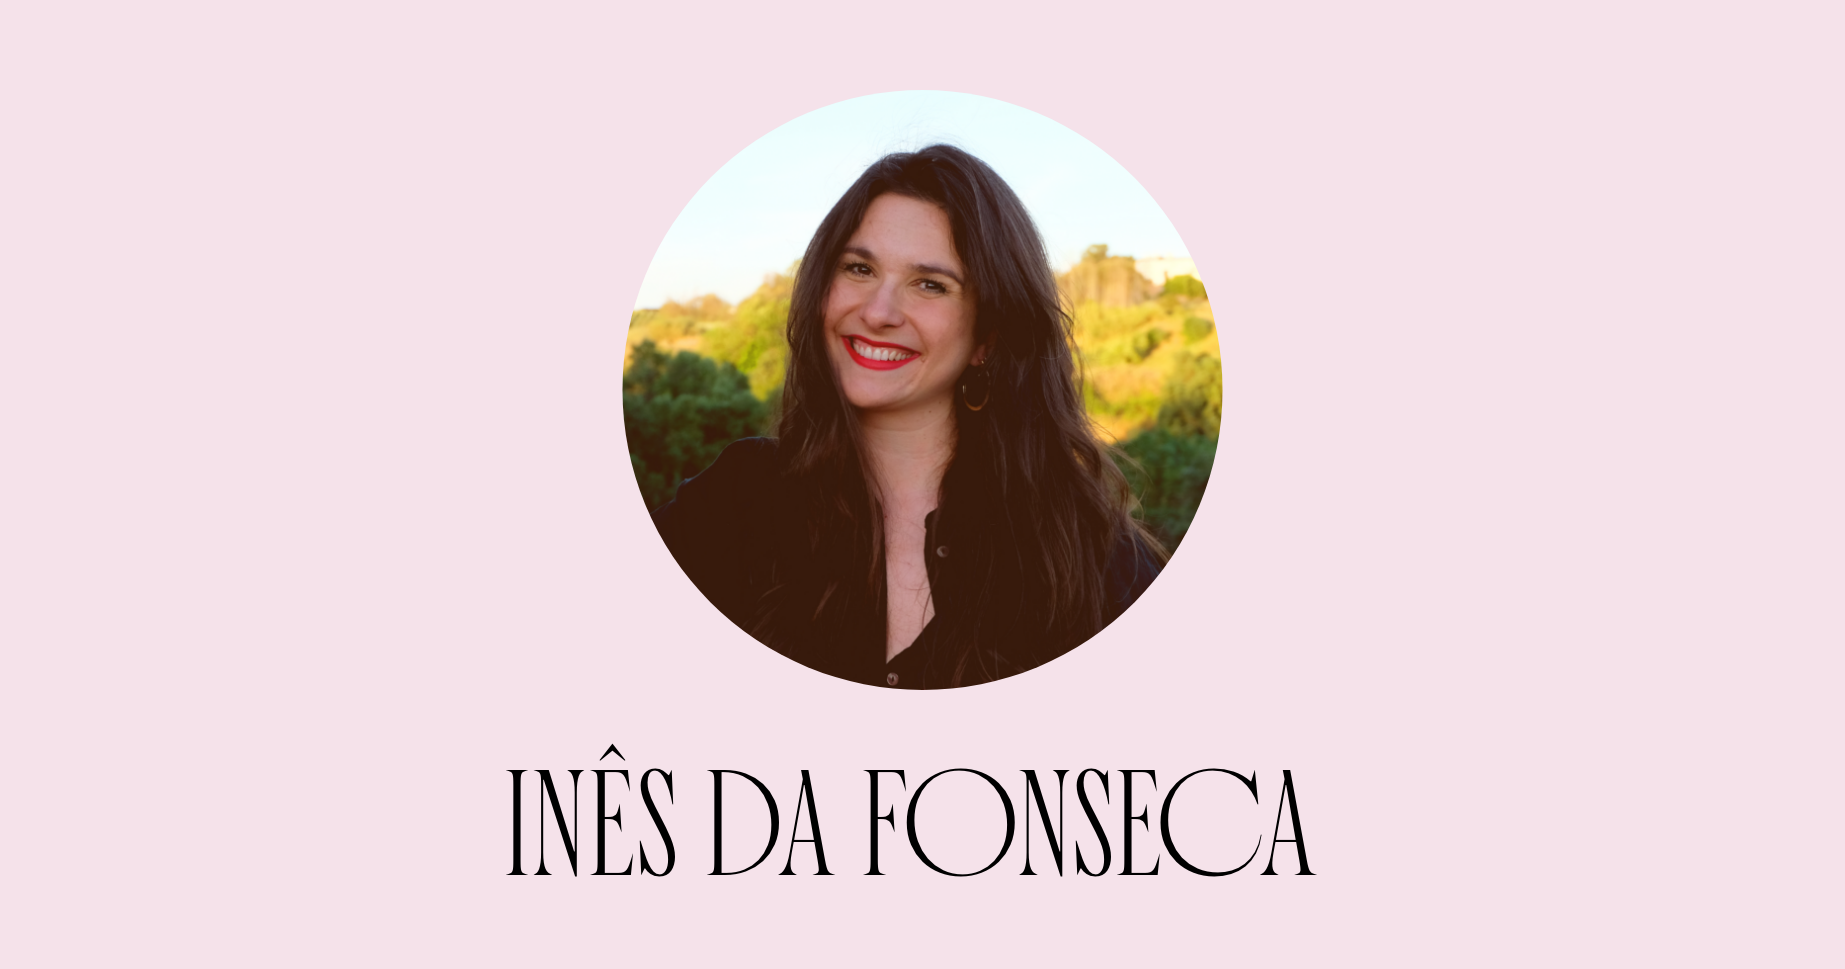  Inês da Fonseca